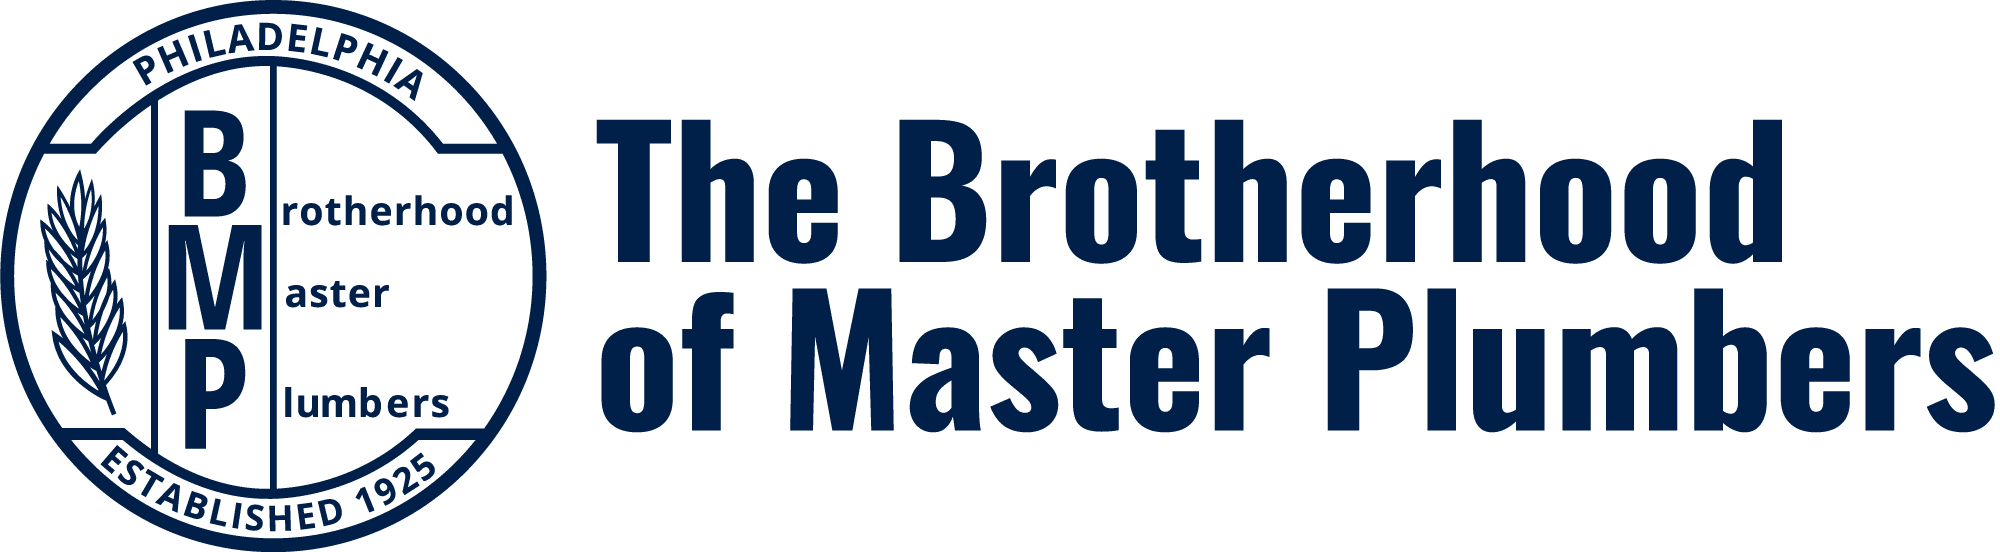 Brotherhood of Master Plumbers